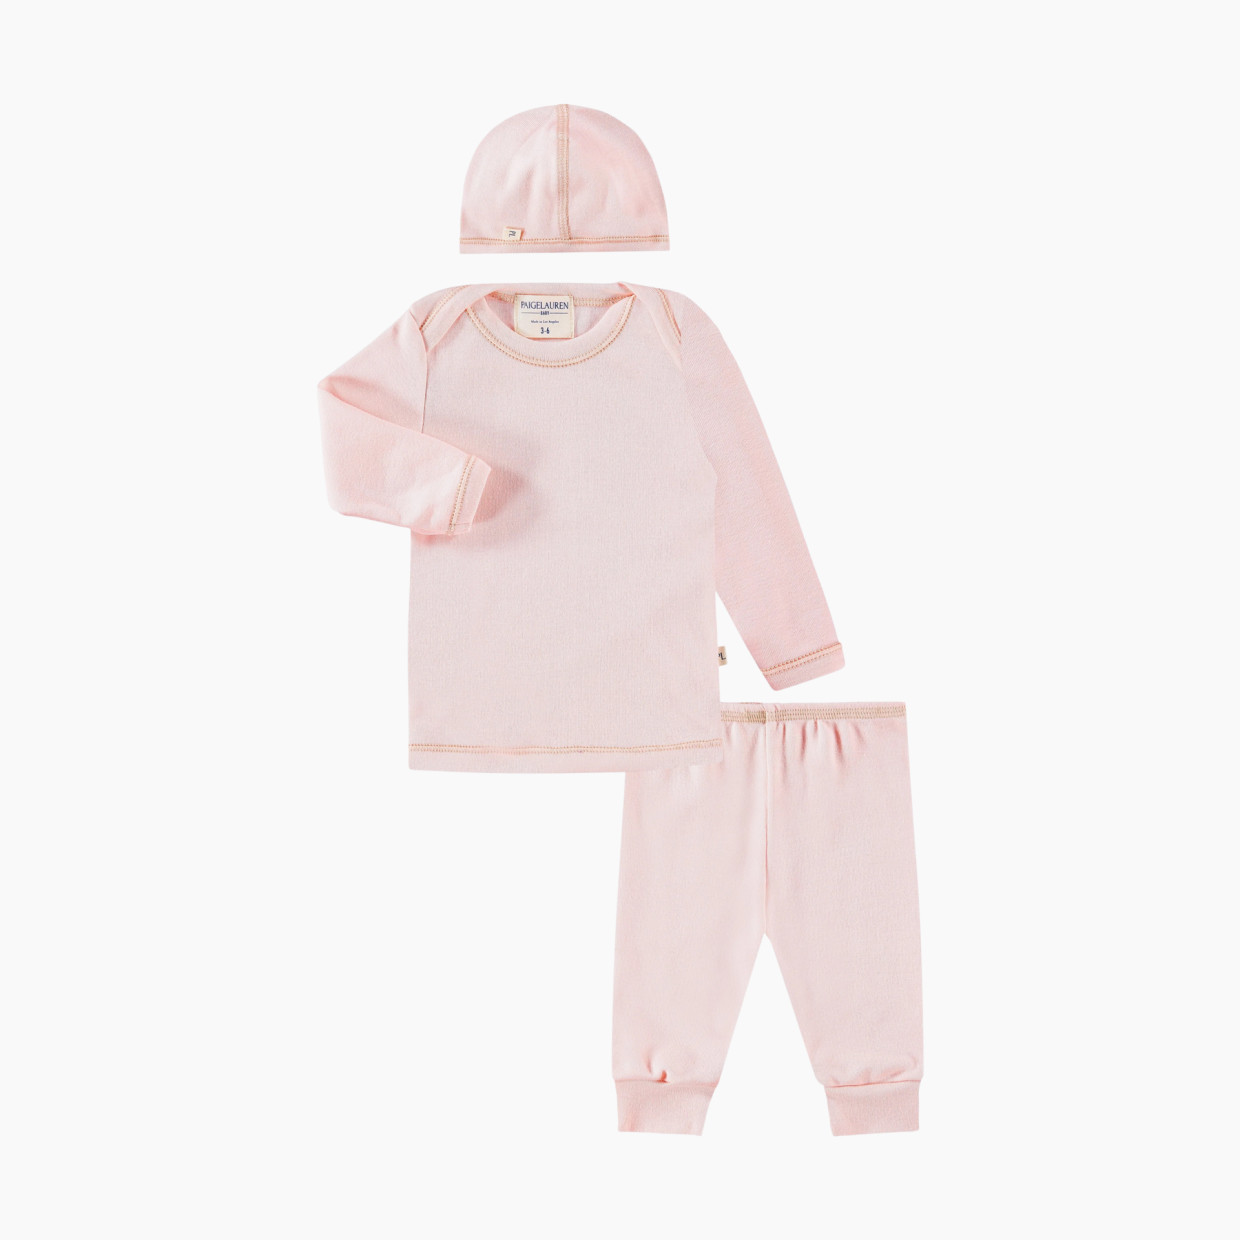 Paige Lauren Baby Rib L/S Lap Tee, Legging, Cap Loungewear Sets-Splendid - Pink, 0-3m.